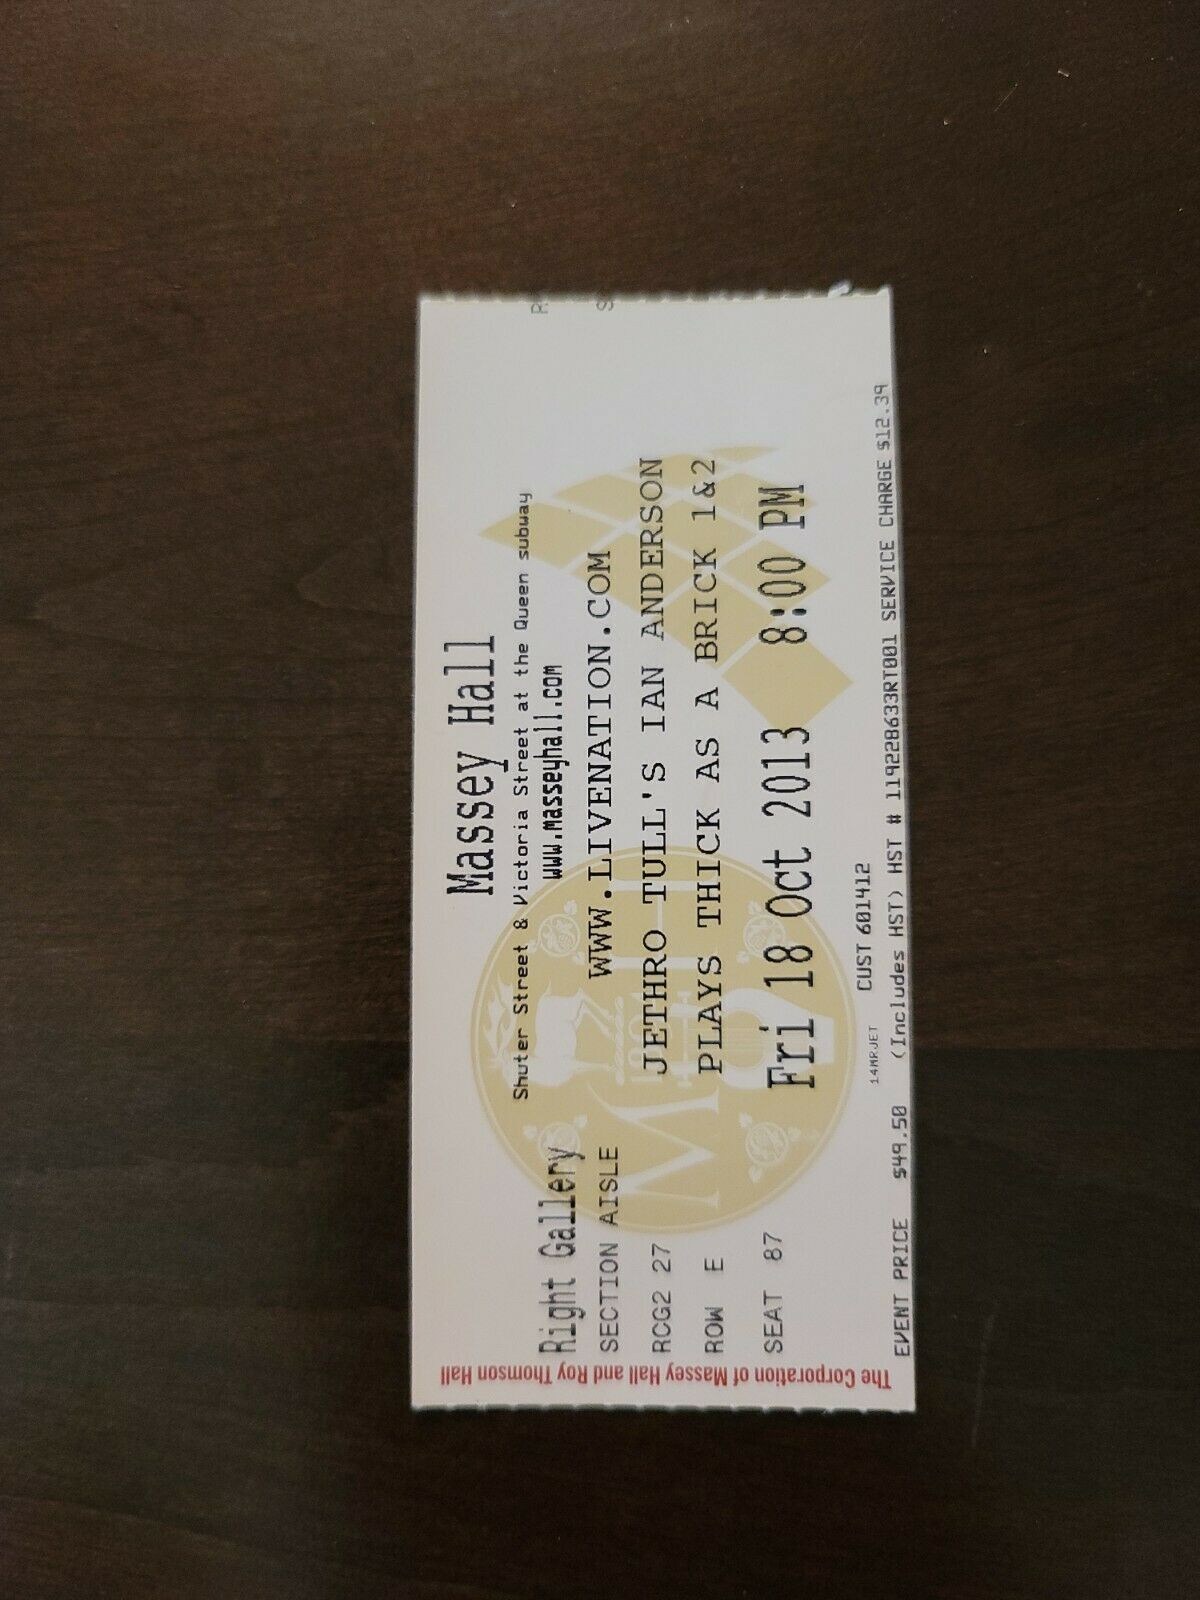 Jethro Tull 2013, Toronto Massey Hall Original Concert Ticket Stub